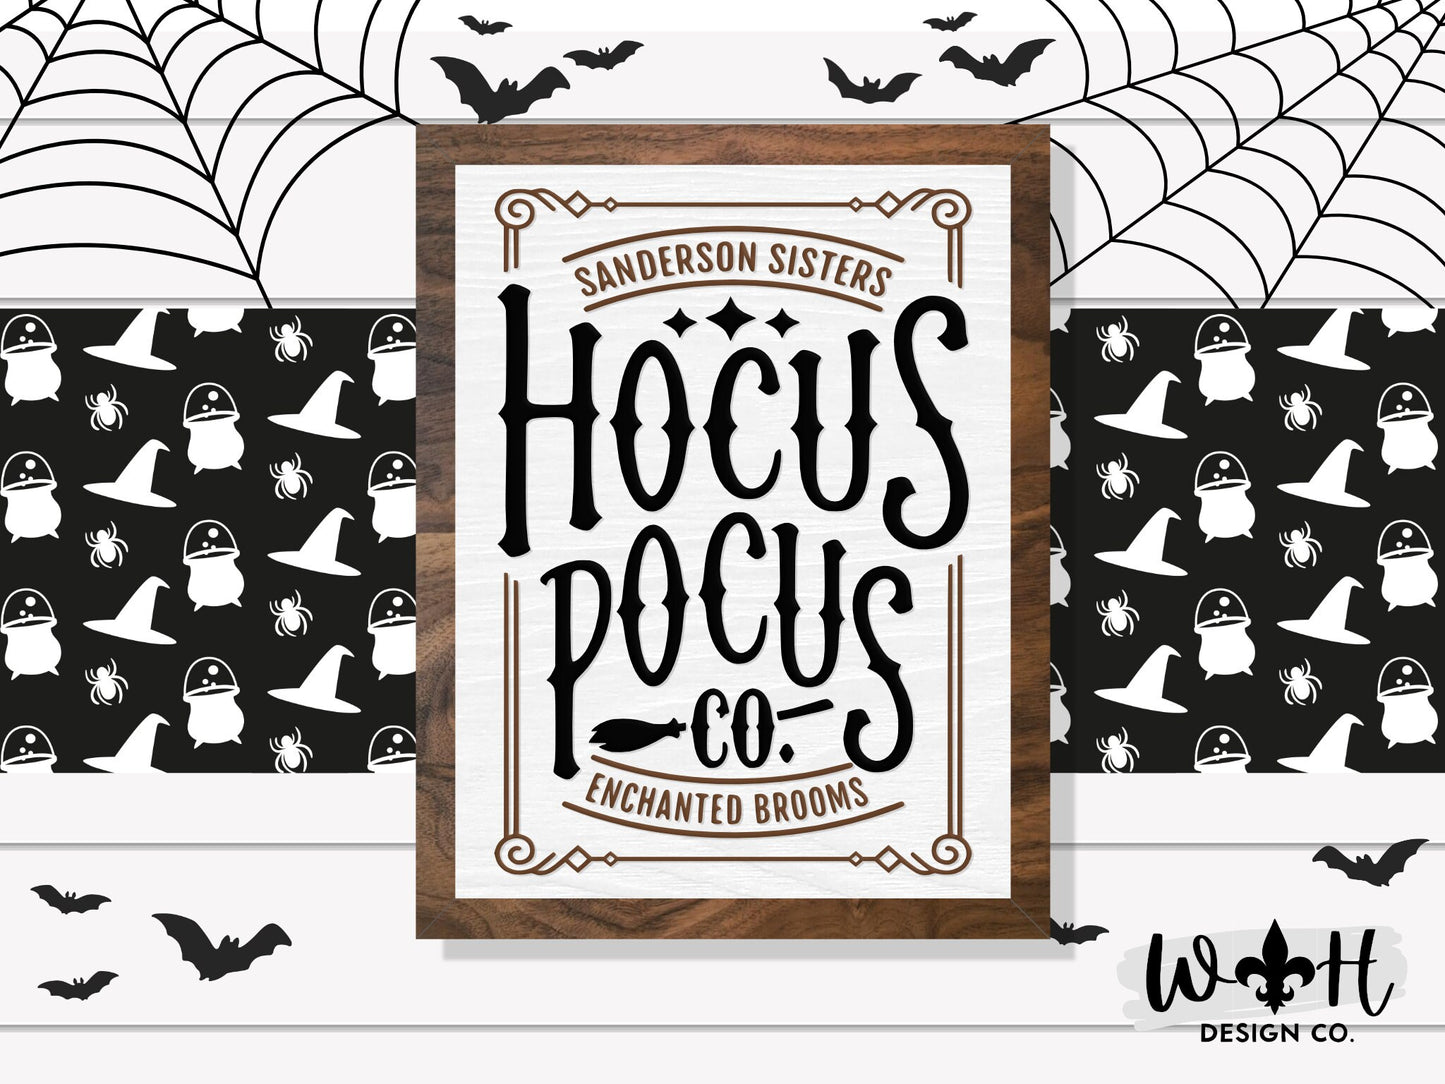 Hocus Pocus Co Enchanted Brooms - Witchy Halloween Coffee Bar Sign - Dark Academia Mantel Decor - Cottagecore Home Decor - Gothic Wall Art